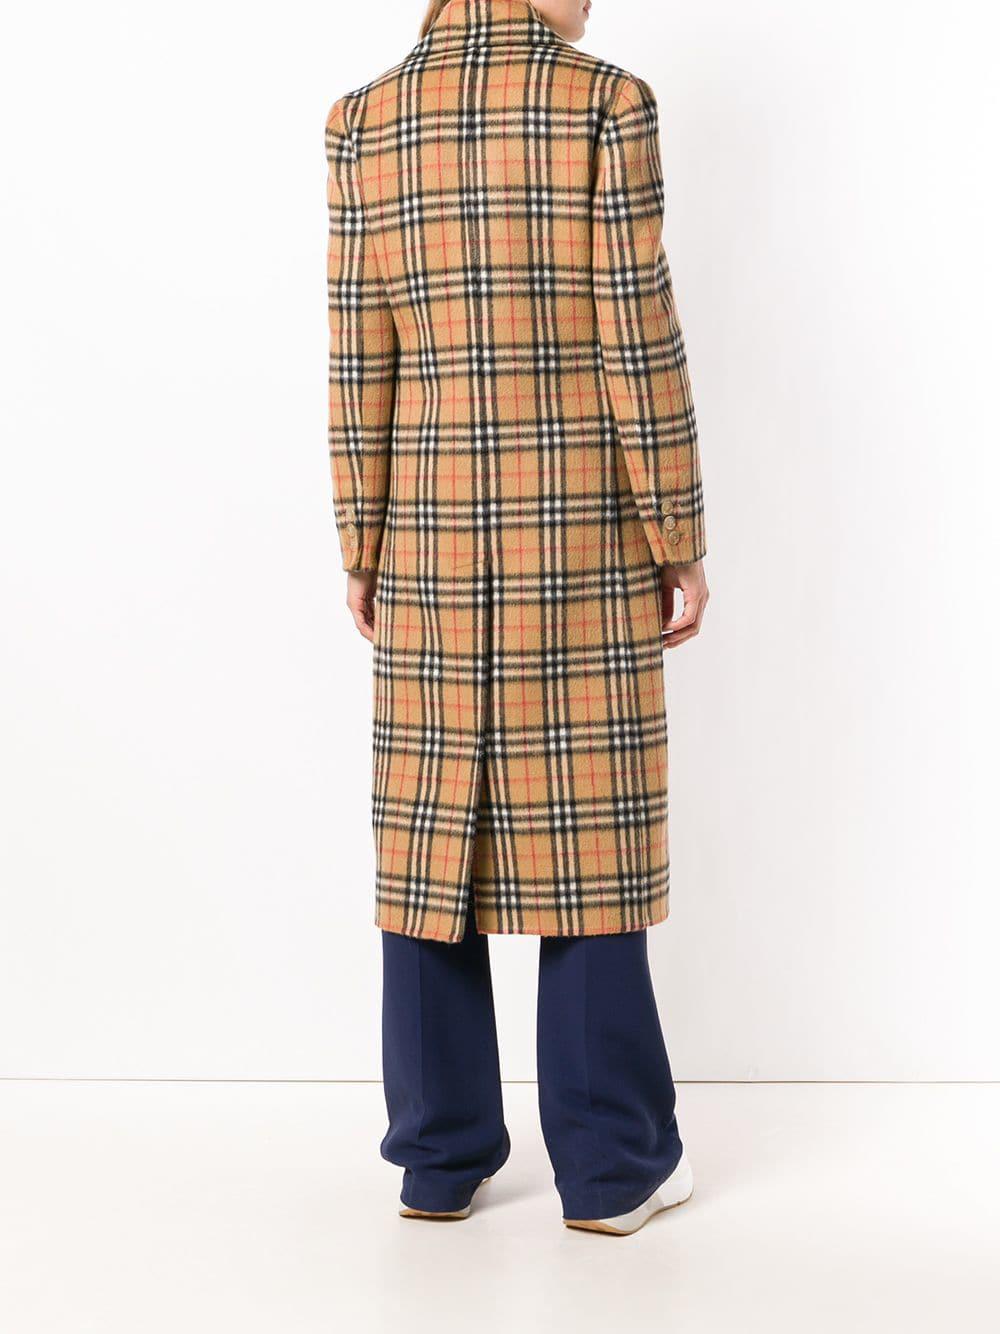 Burberry Vintage Check Alpaca Wool Tailored Coat in Brown | Lyst